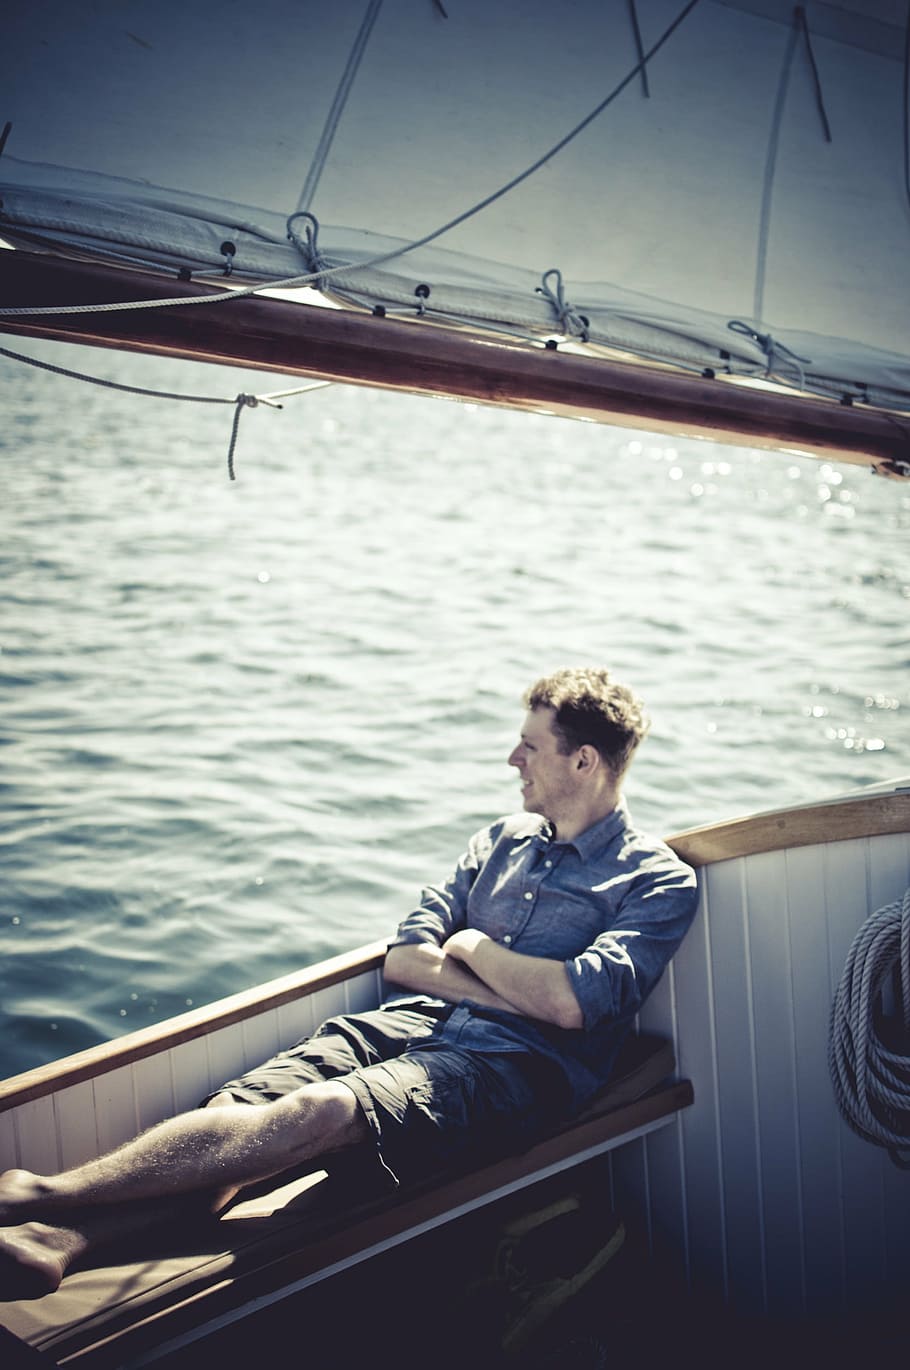 manusia, duduk, bangku, kursi, perahu, perahu layar, berperahu, danau, air, pria